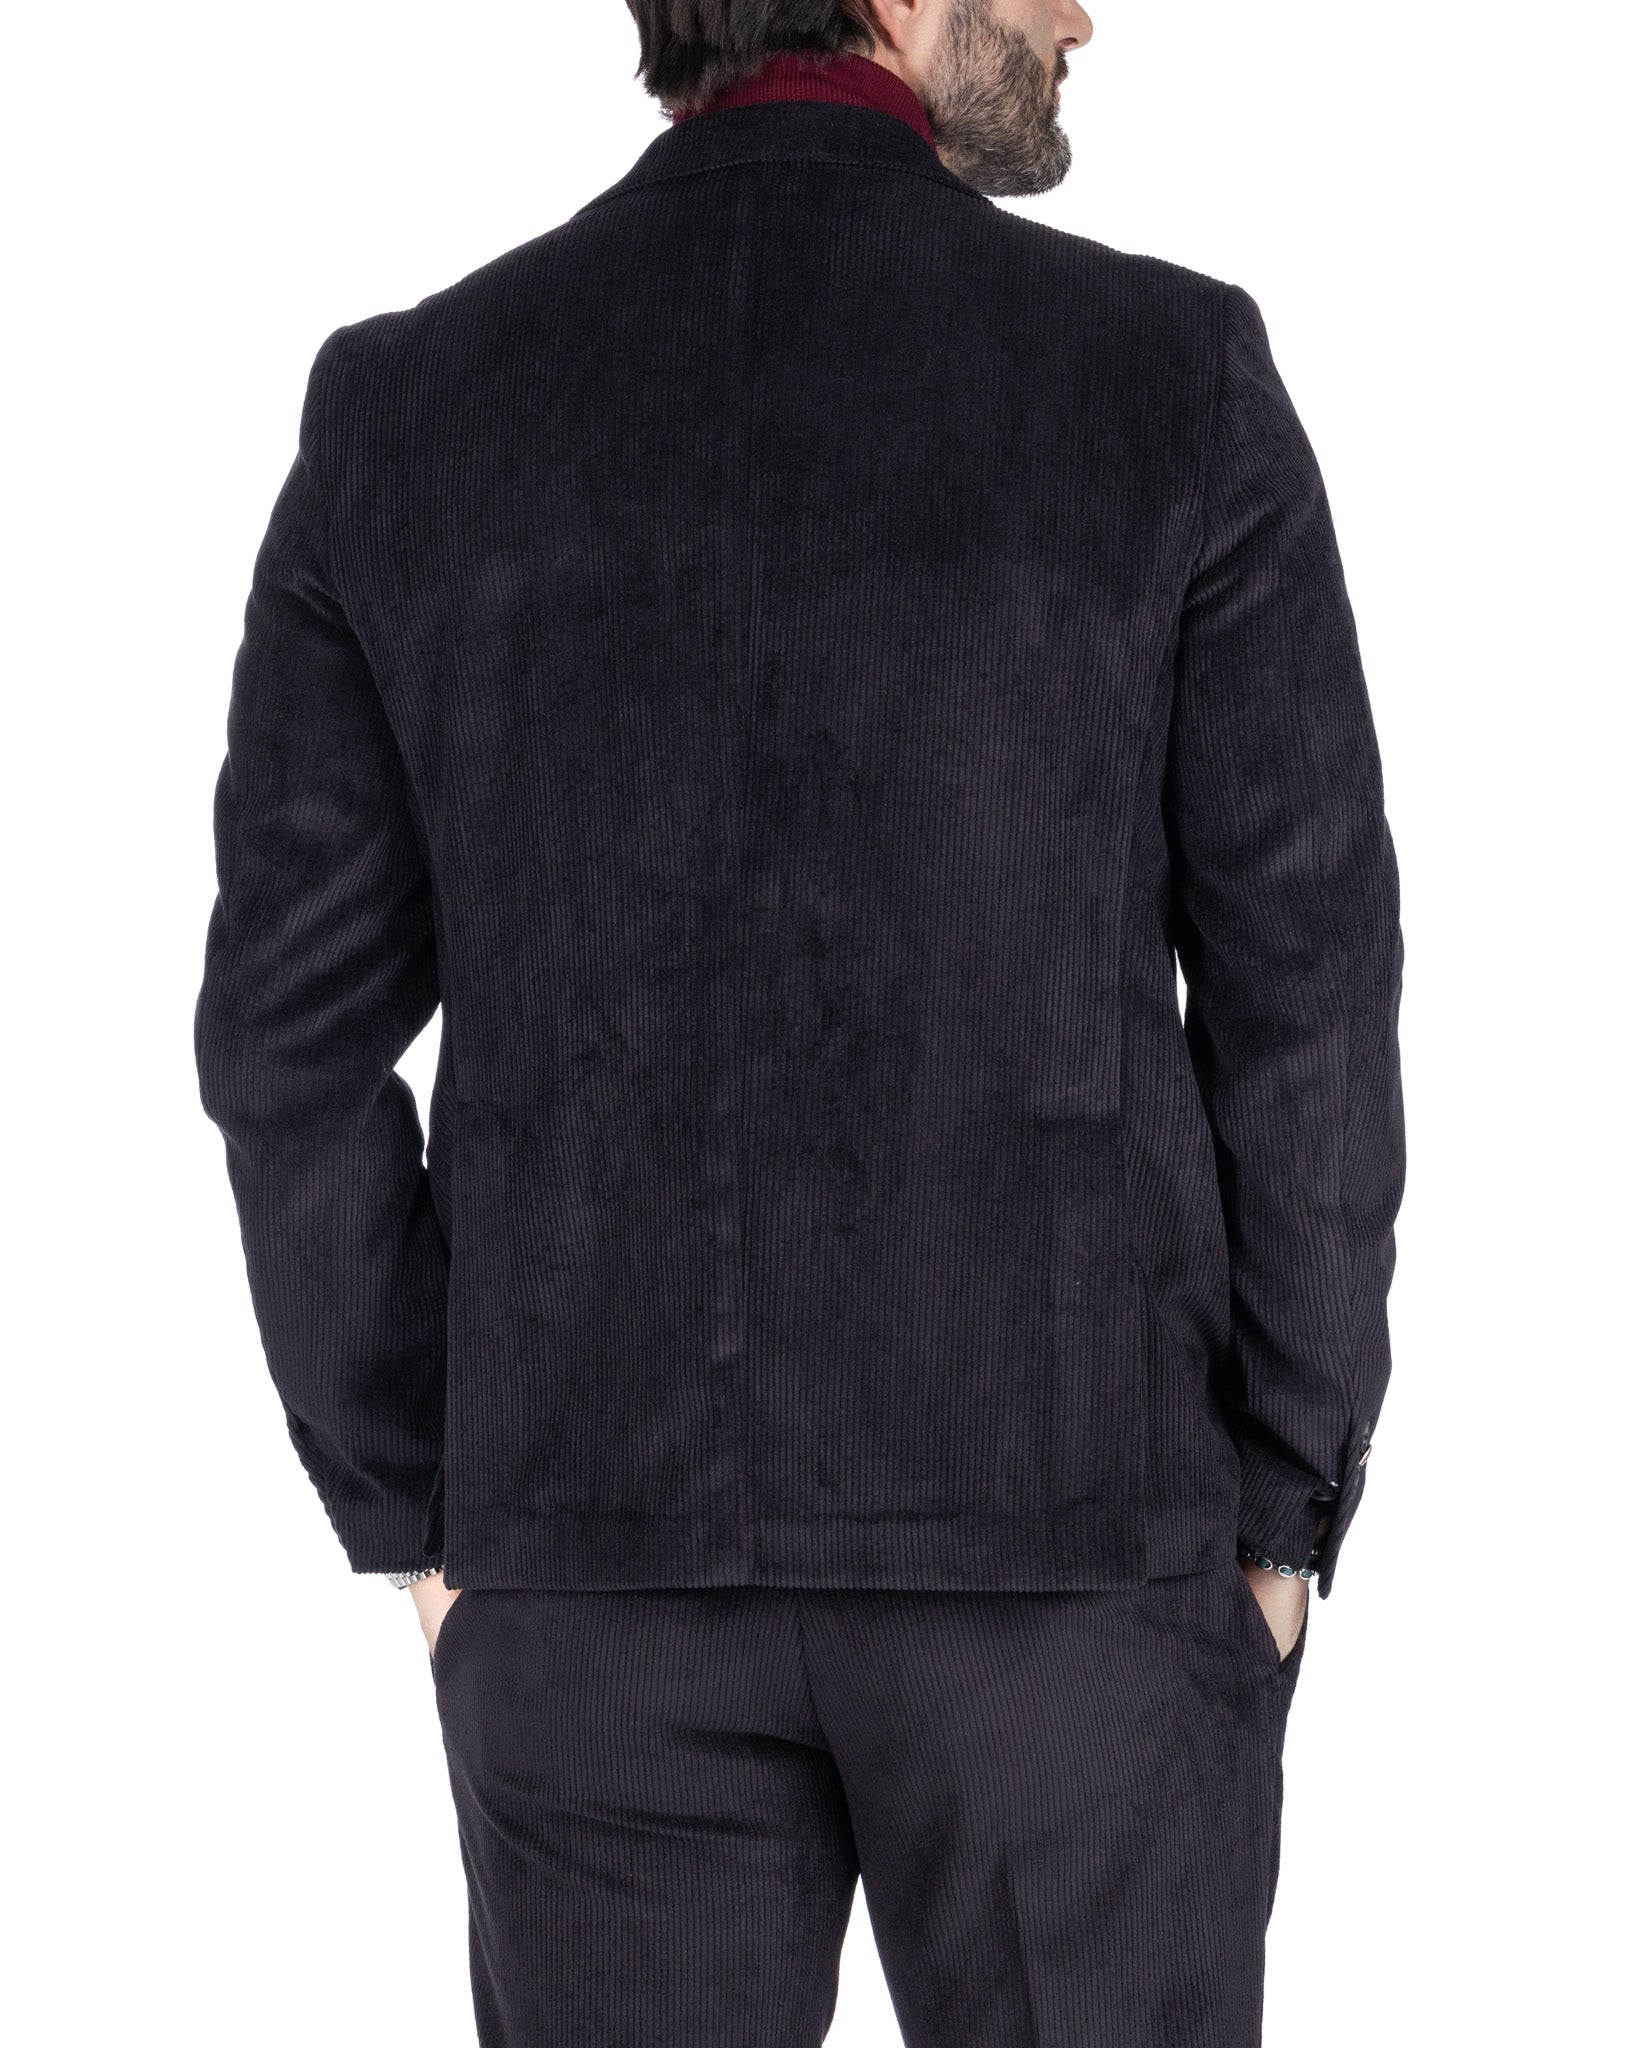 Mads - two-button black velvet jacket